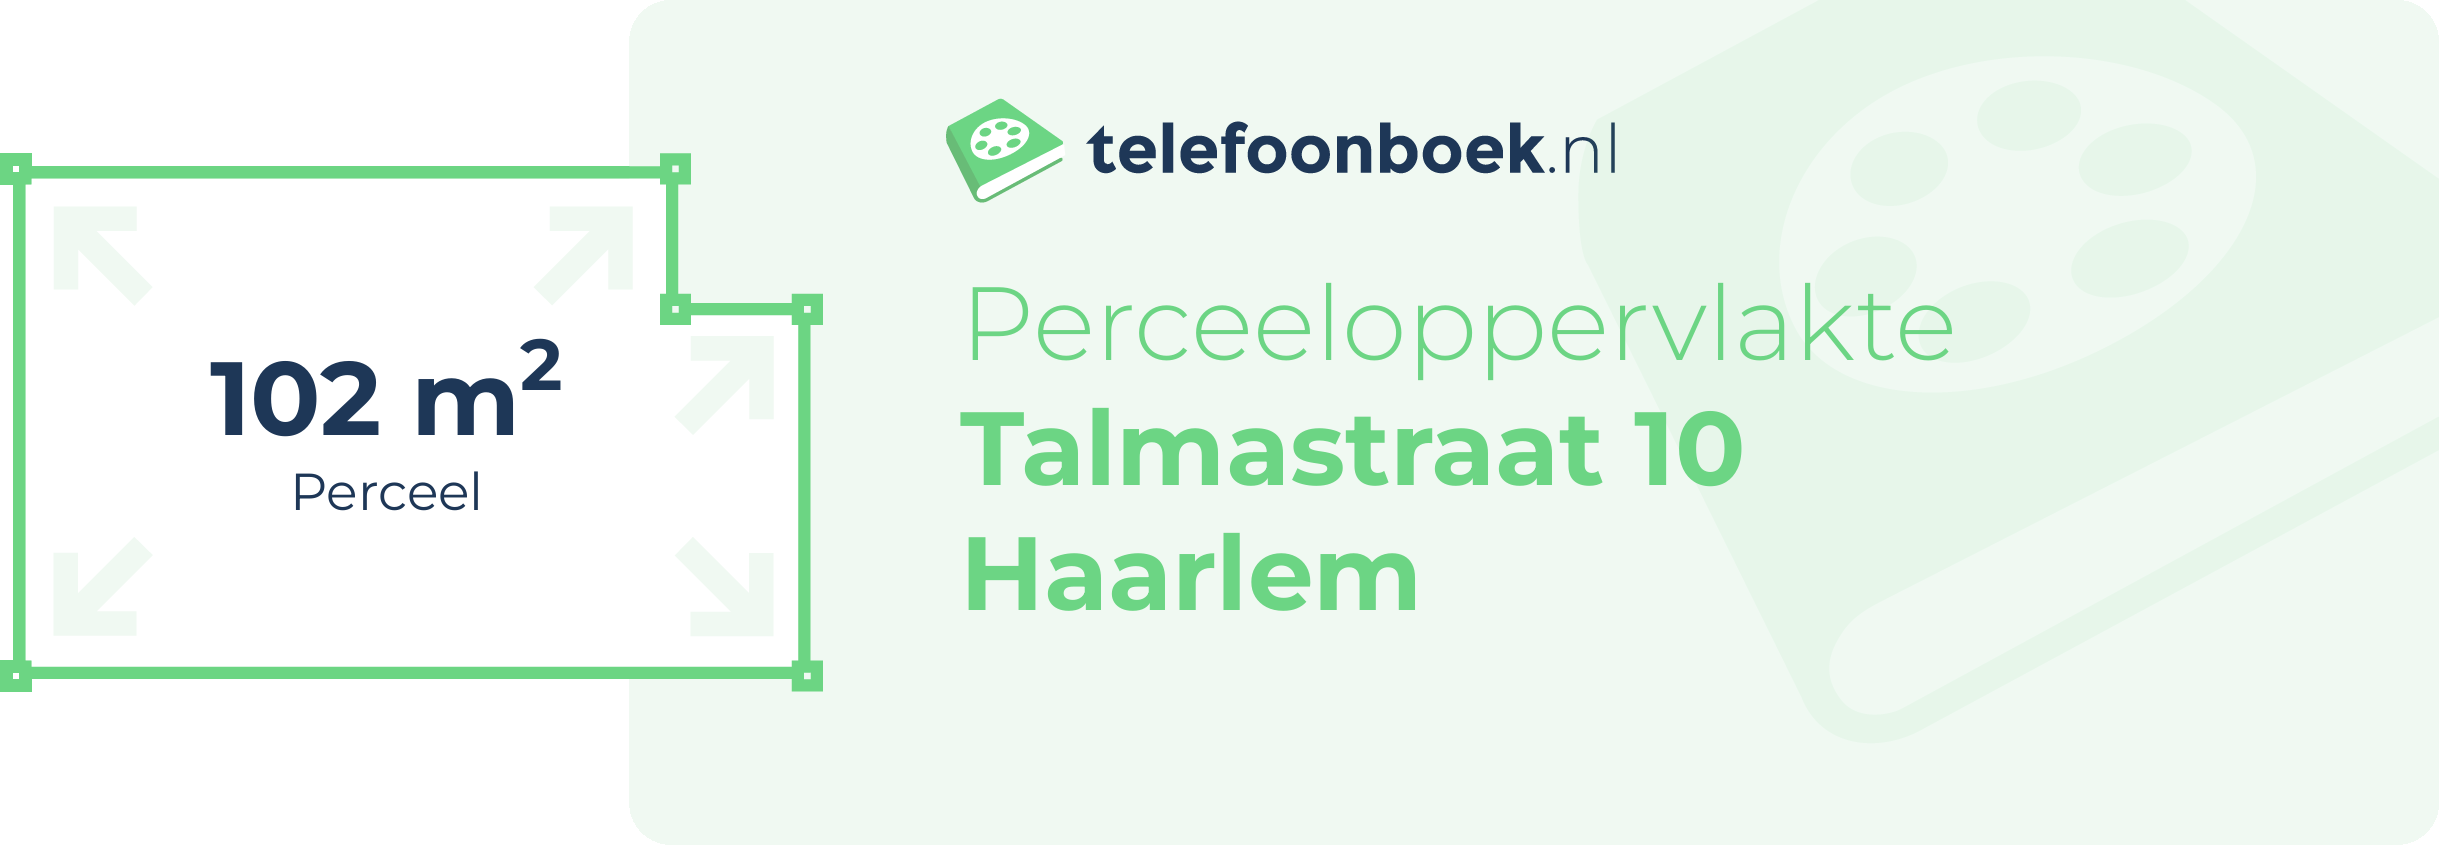 Perceeloppervlakte Talmastraat 10 Haarlem